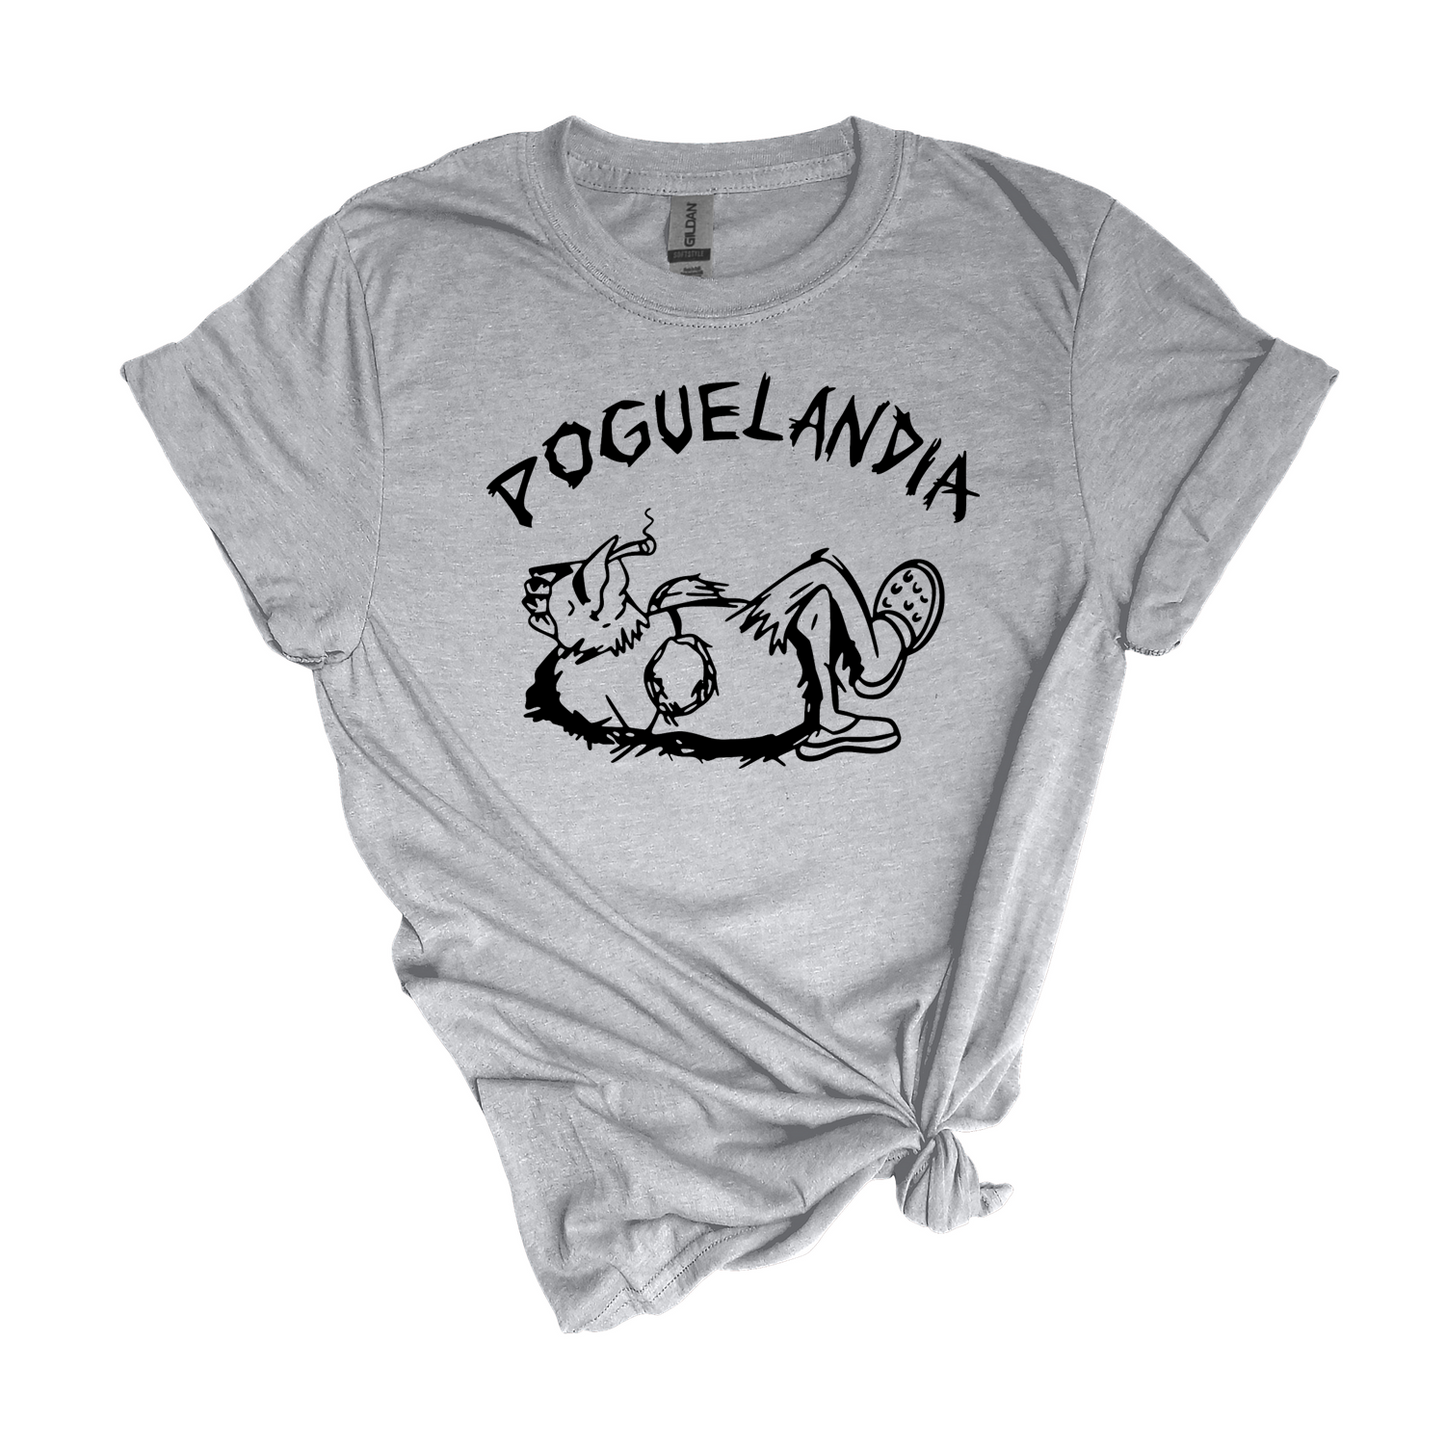 Poguelandia - Adult Unisex Soft T-Shirt - OBX - Outer Banks